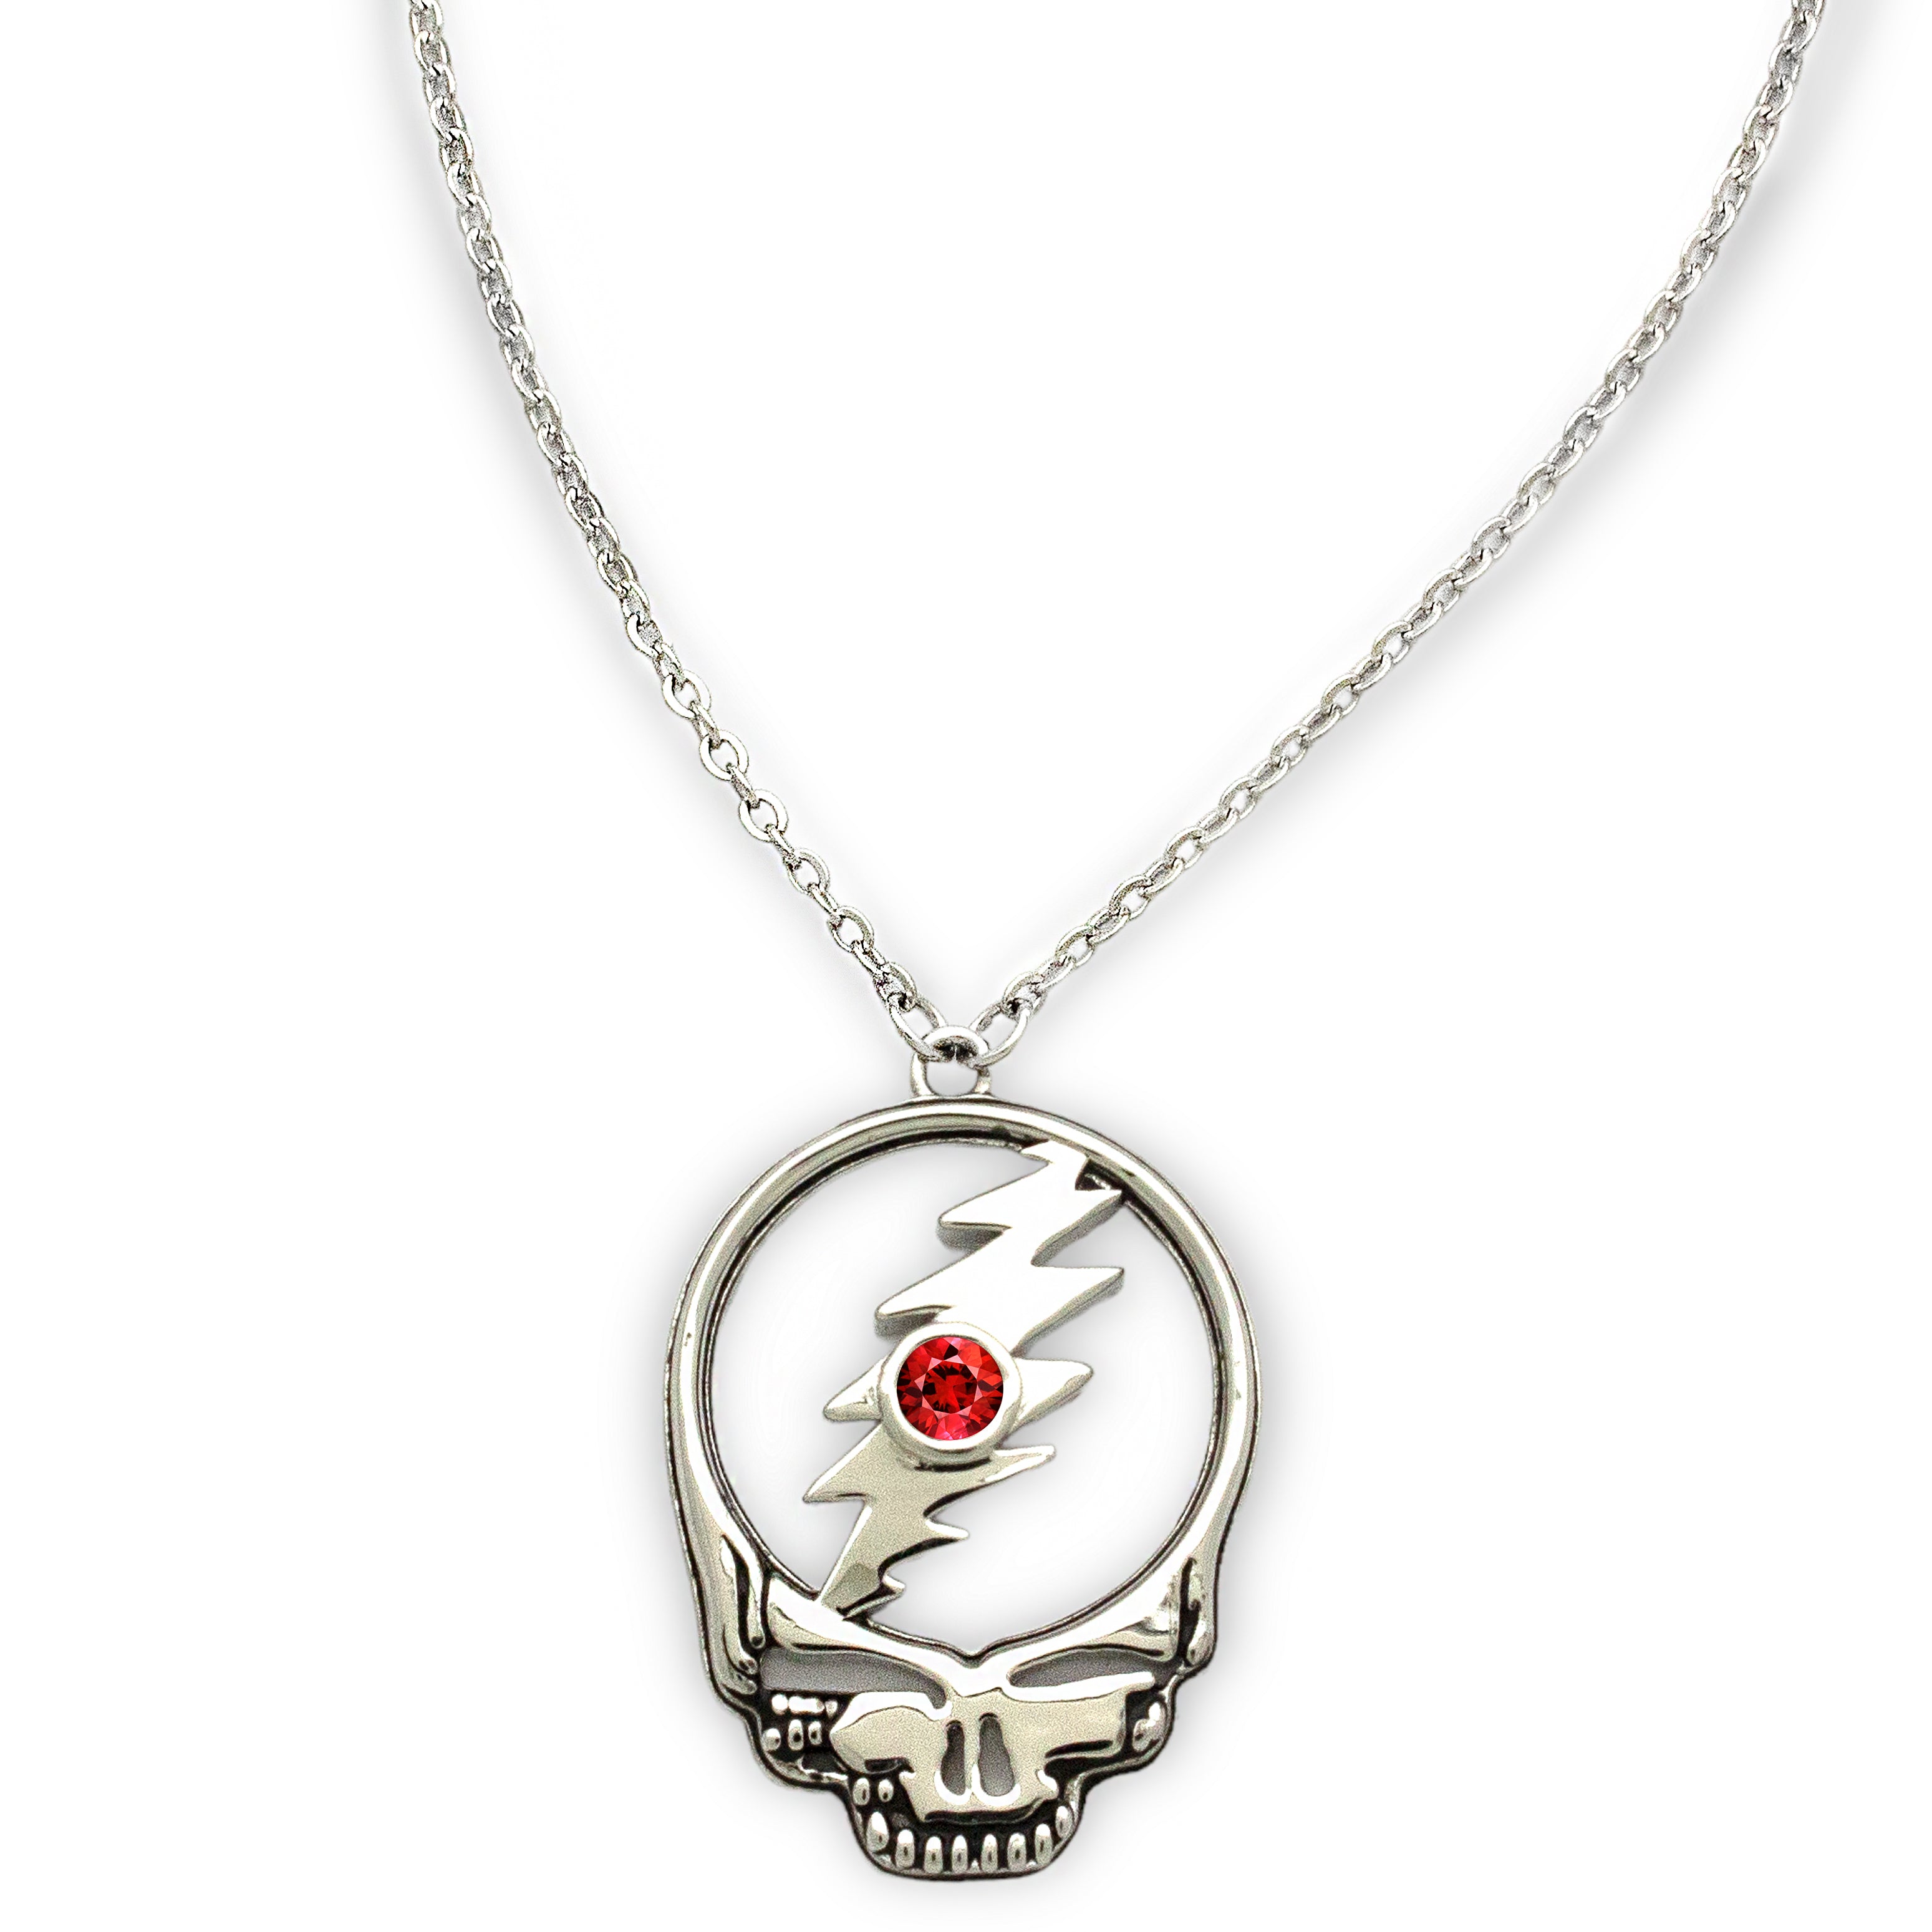 Birthstone Necklaces For Mom That She Will Love | John Atencio